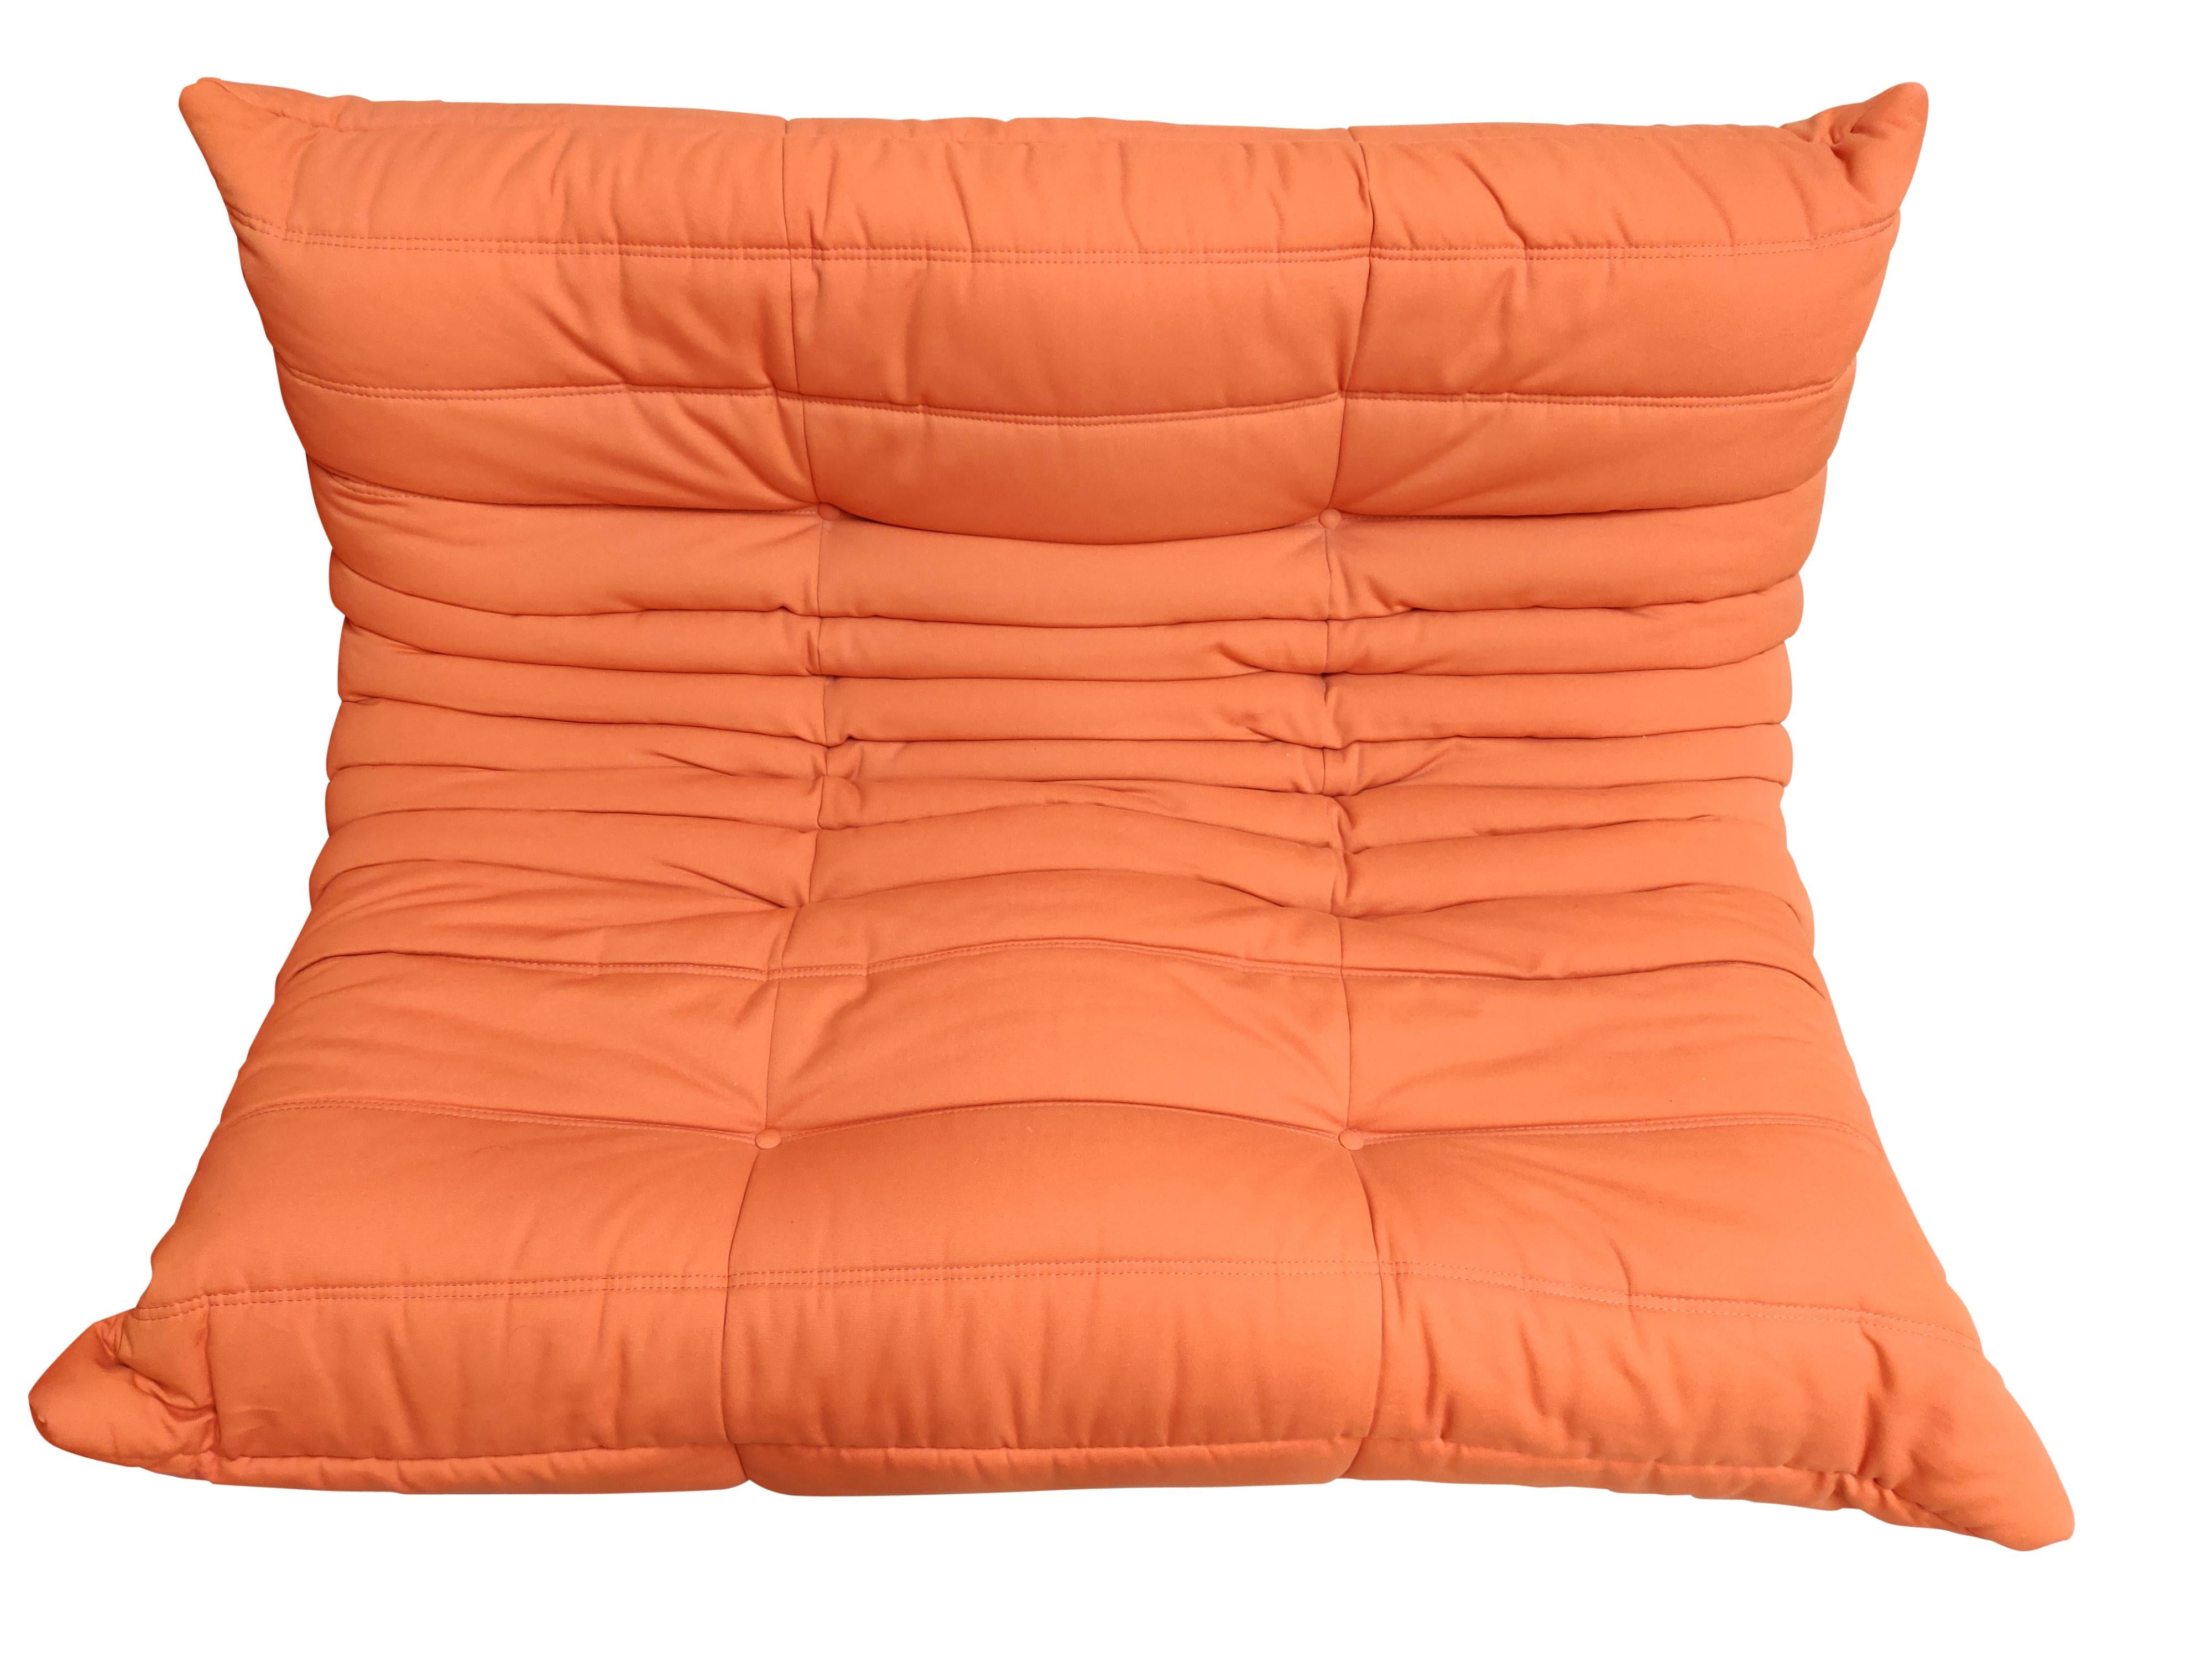 Fabric Modular 3-Piece Orange Sofa by Michel Ducaroy for Ligne Roset